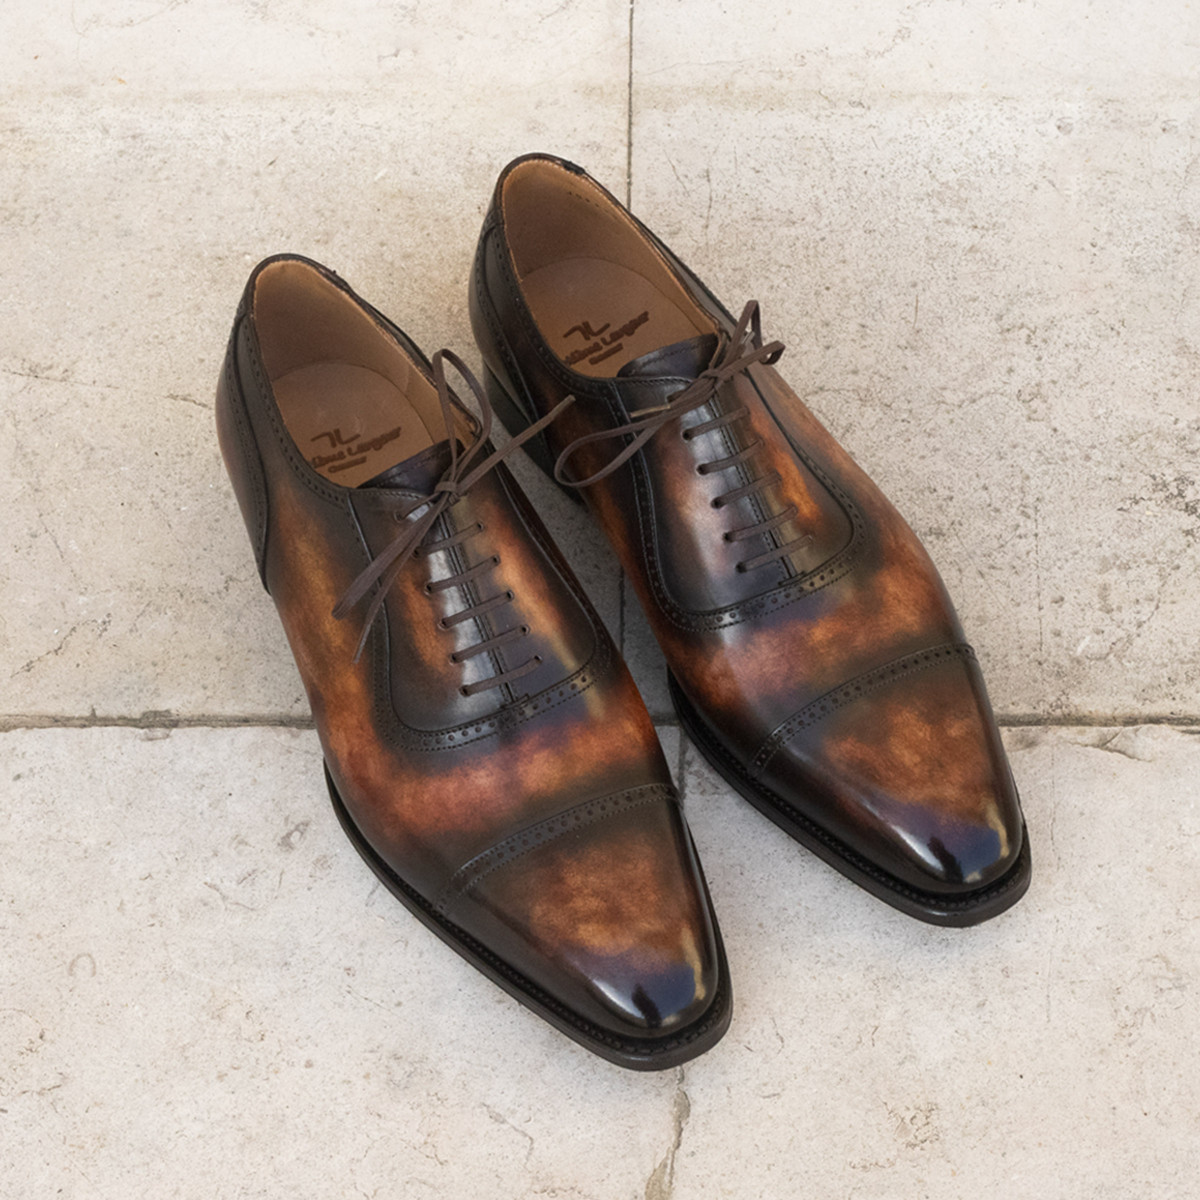 Purple Patina Leather Derby Shoes for Men - LYNDON by Civardi